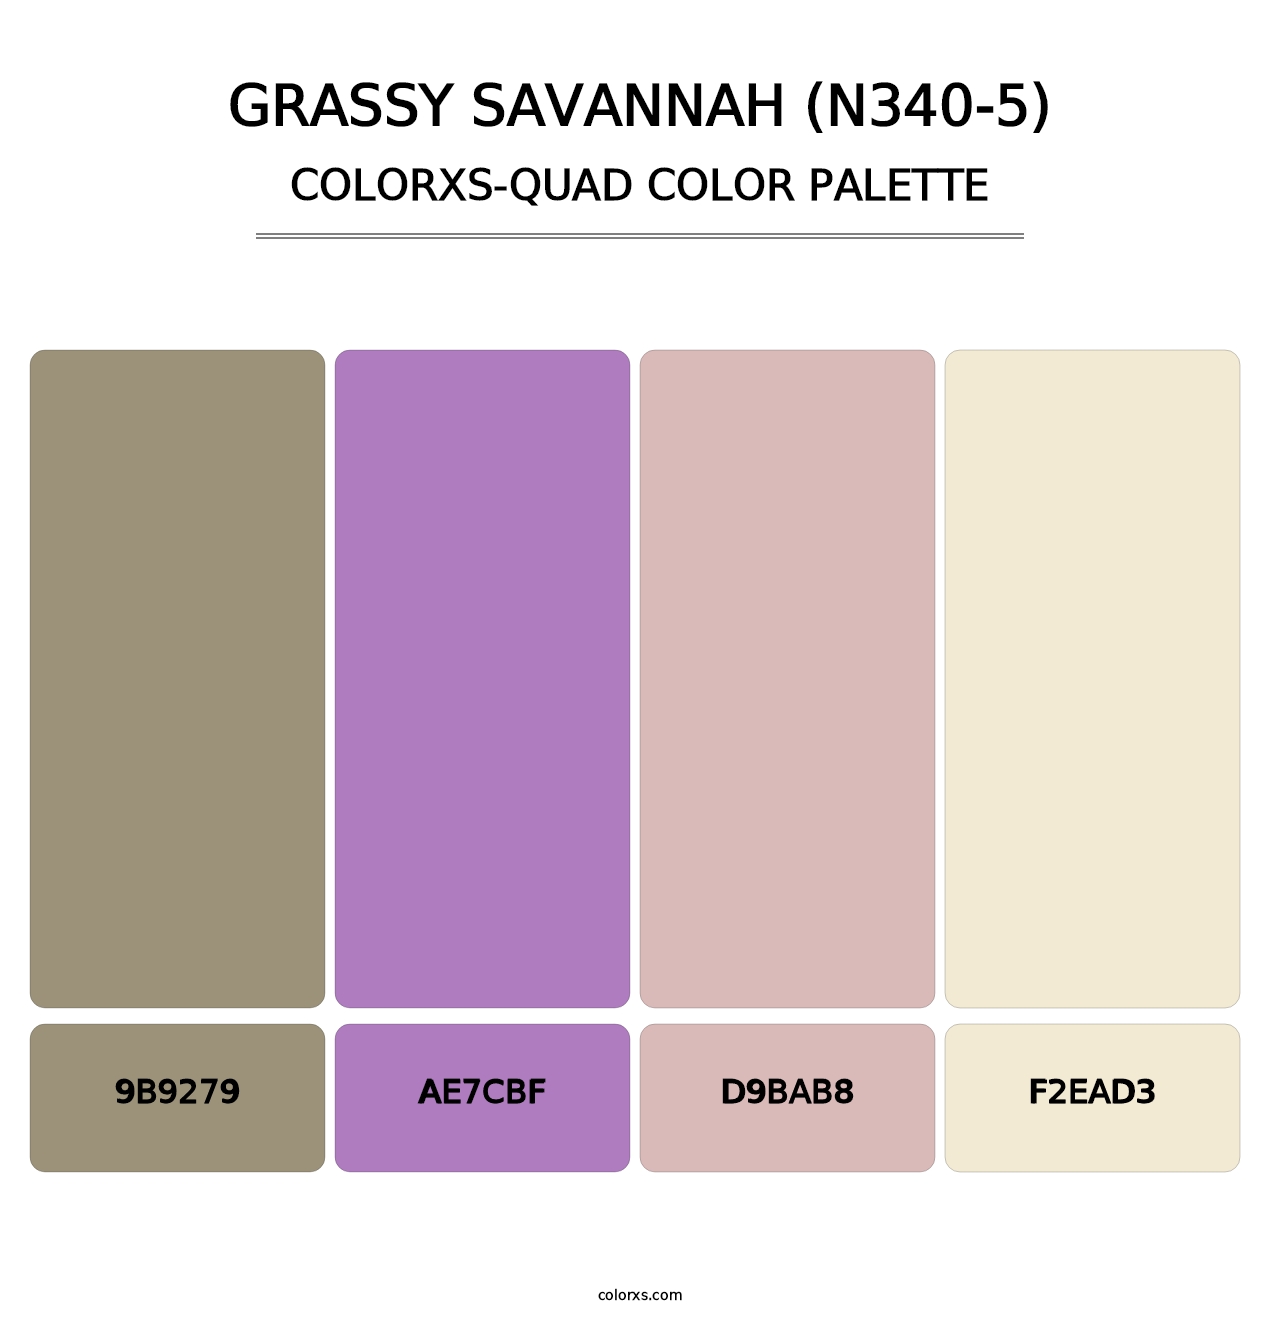 Grassy Savannah (N340-5) - Colorxs Quad Palette